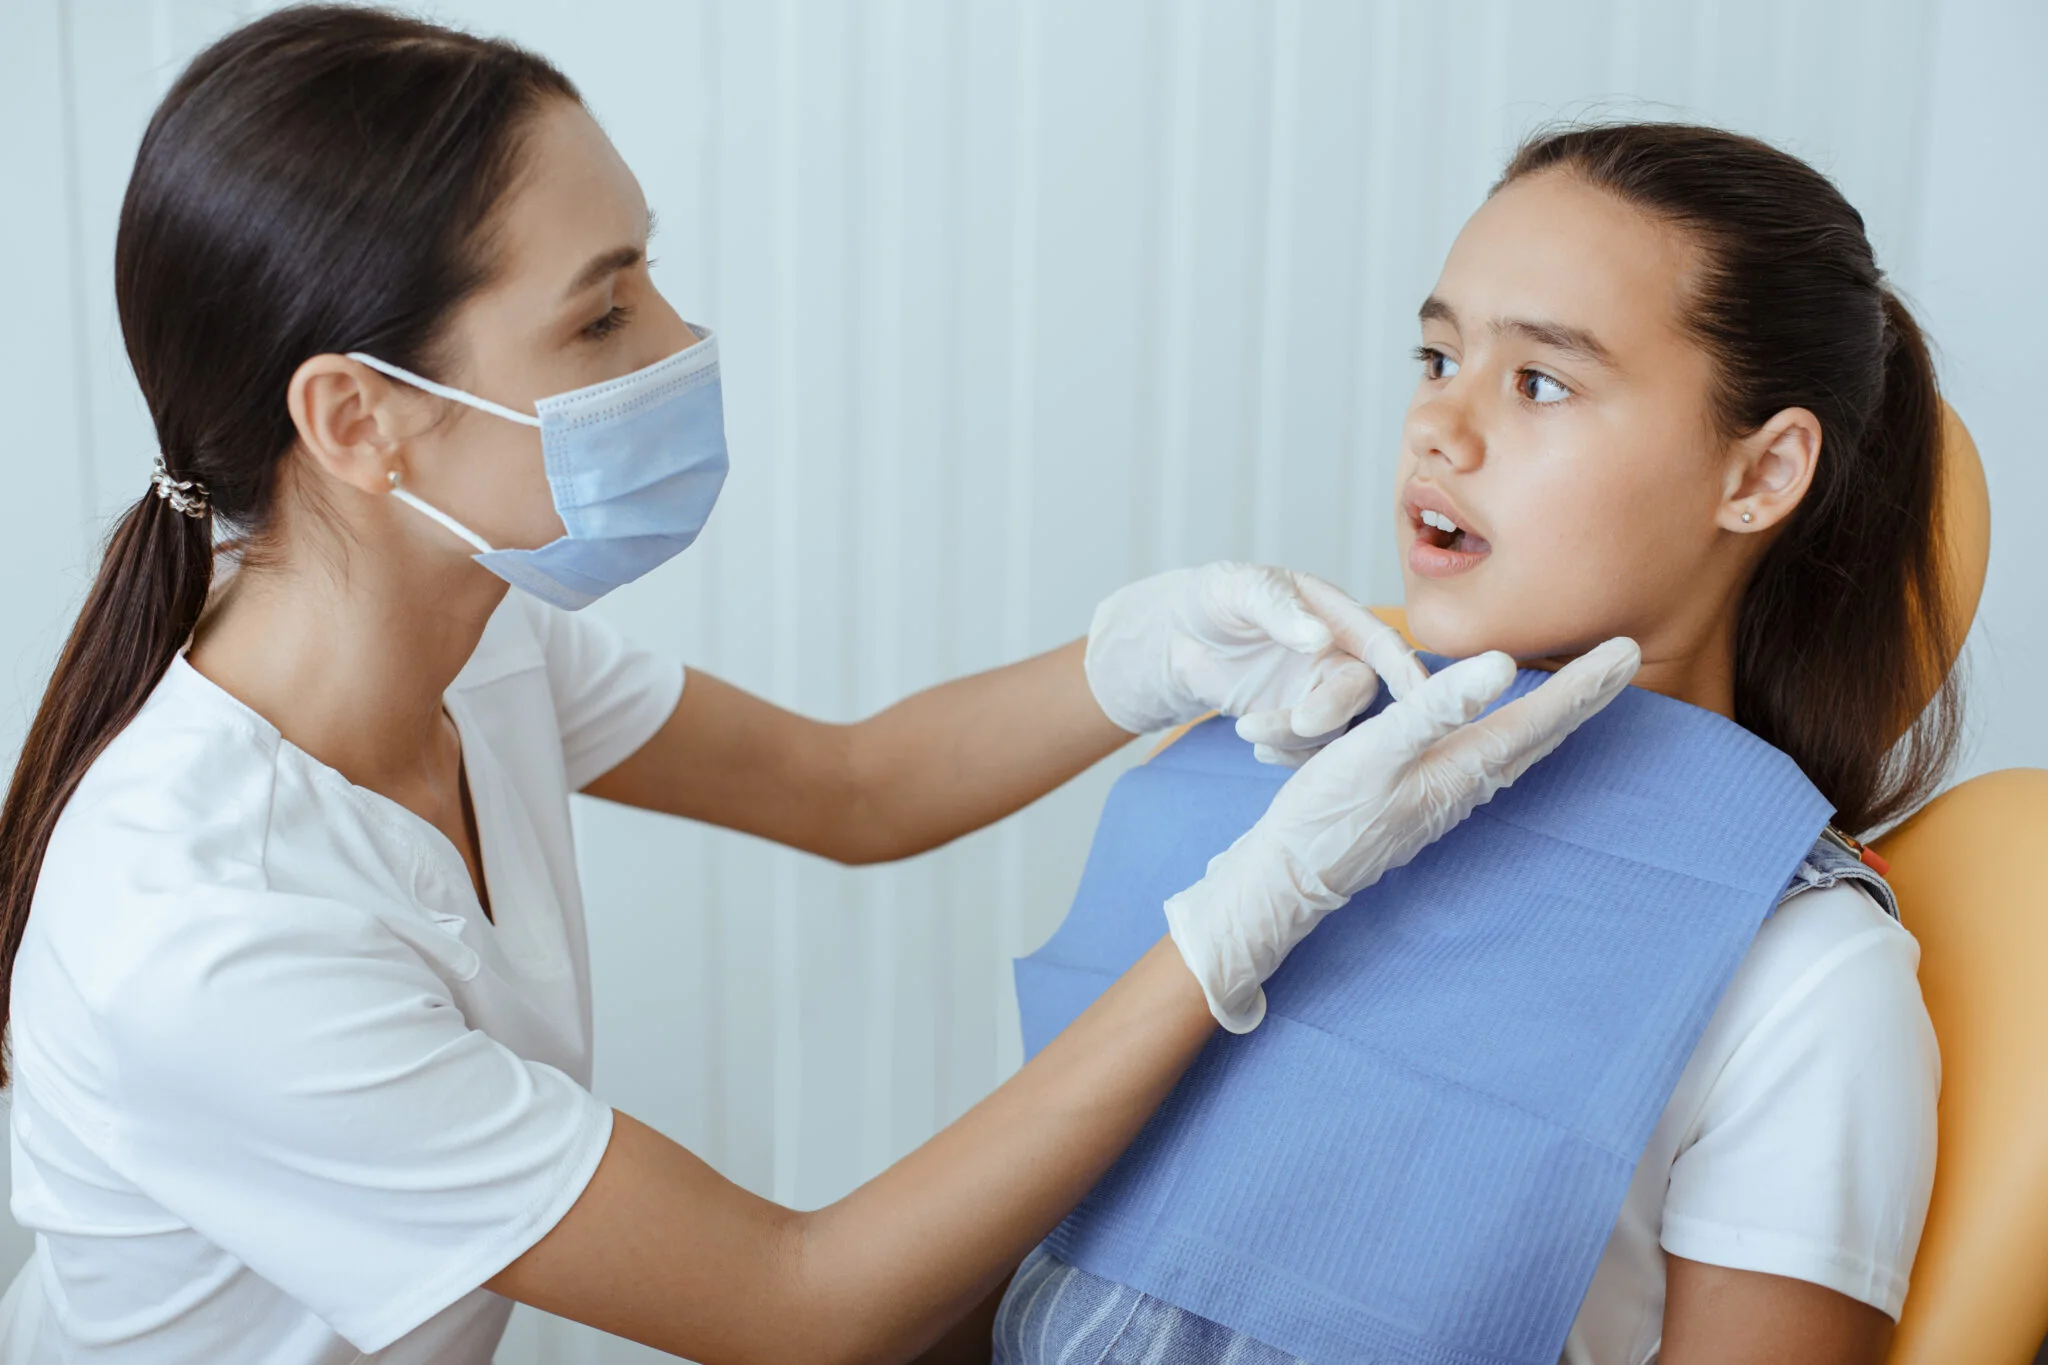 pediatric dentist making examination procedure